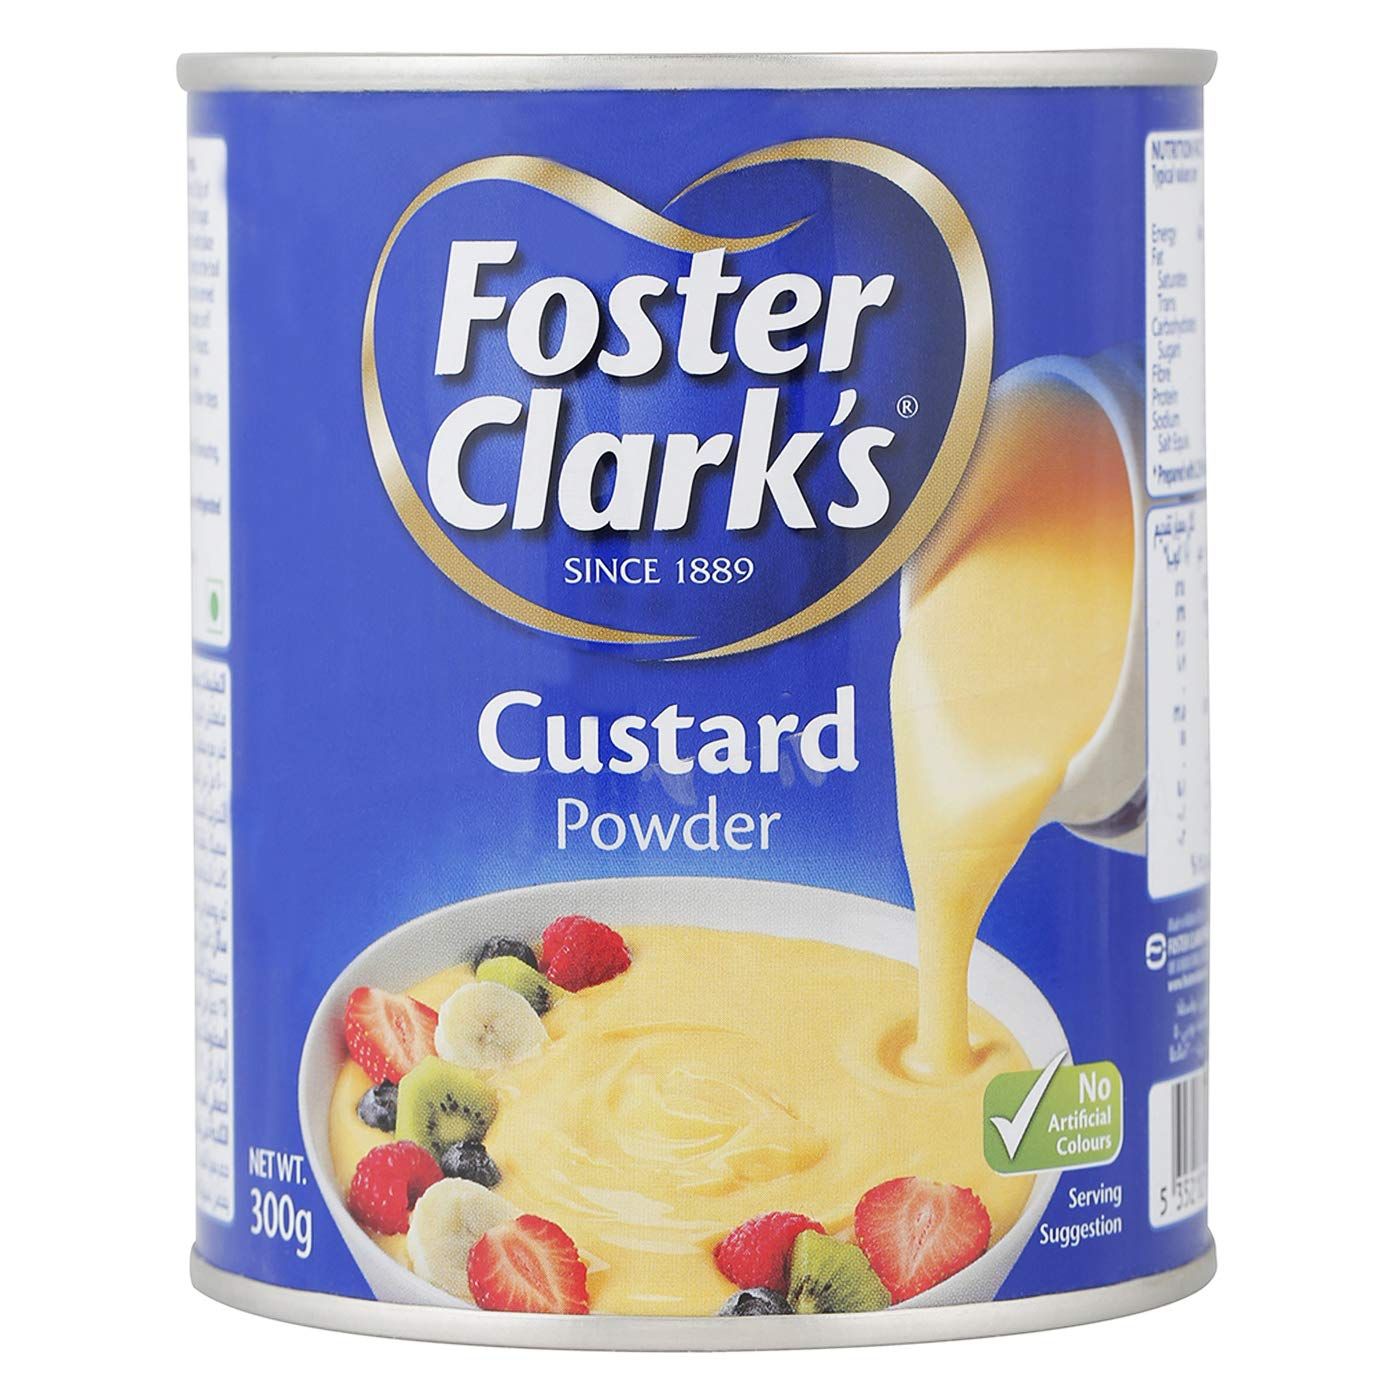 Foster Clark's Custard Powder Image